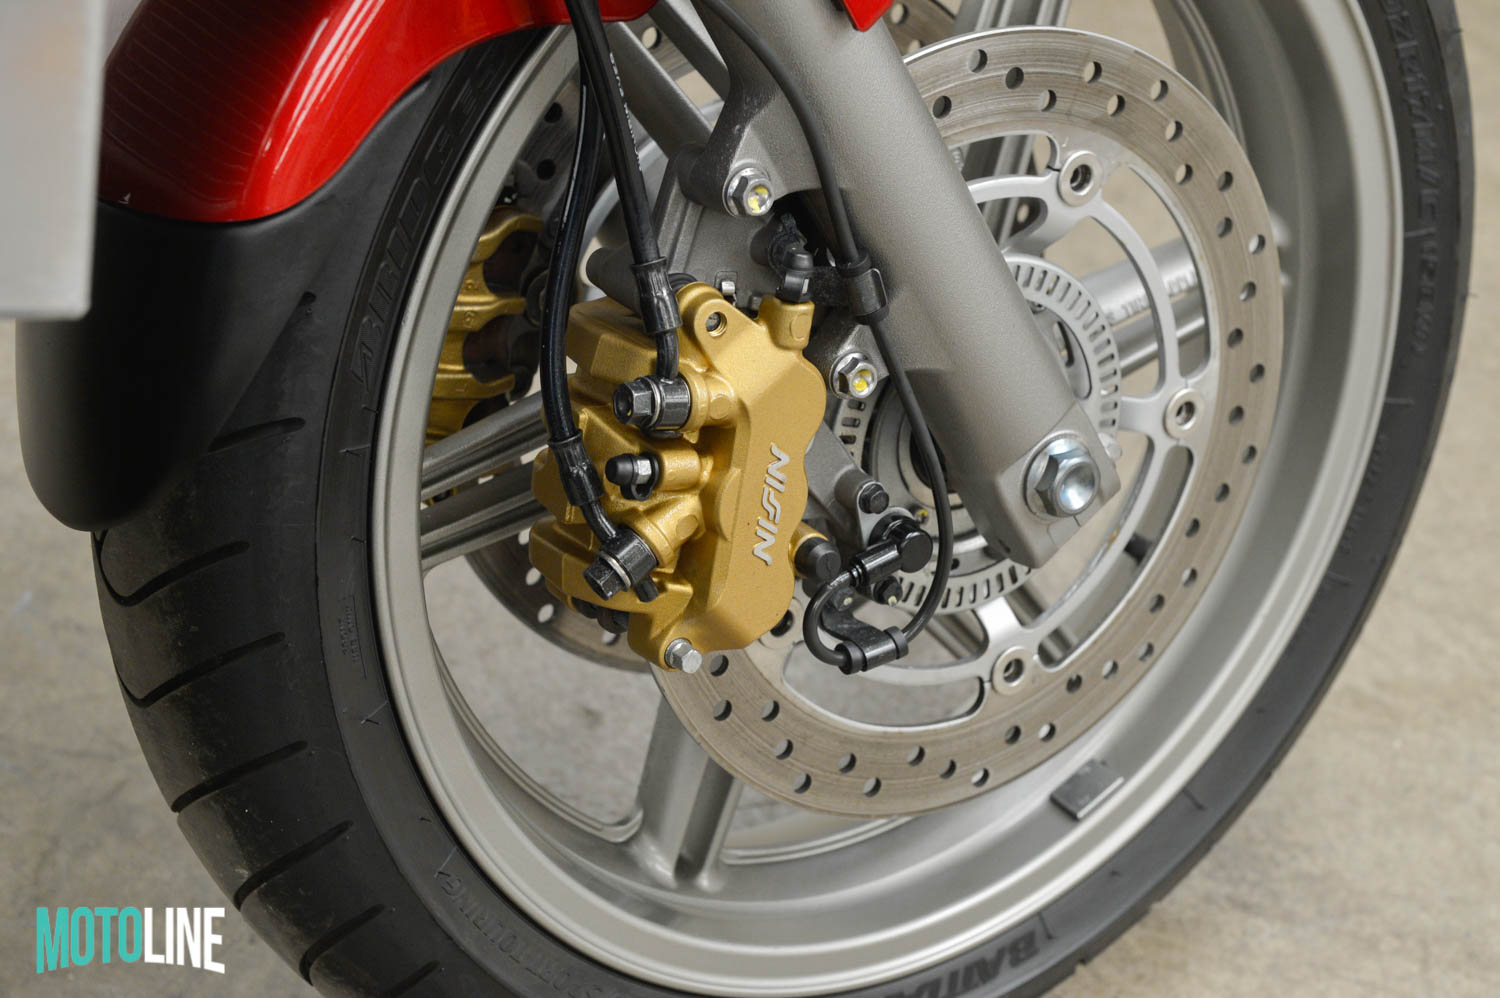 2012 Honda CBF 1000 ABS